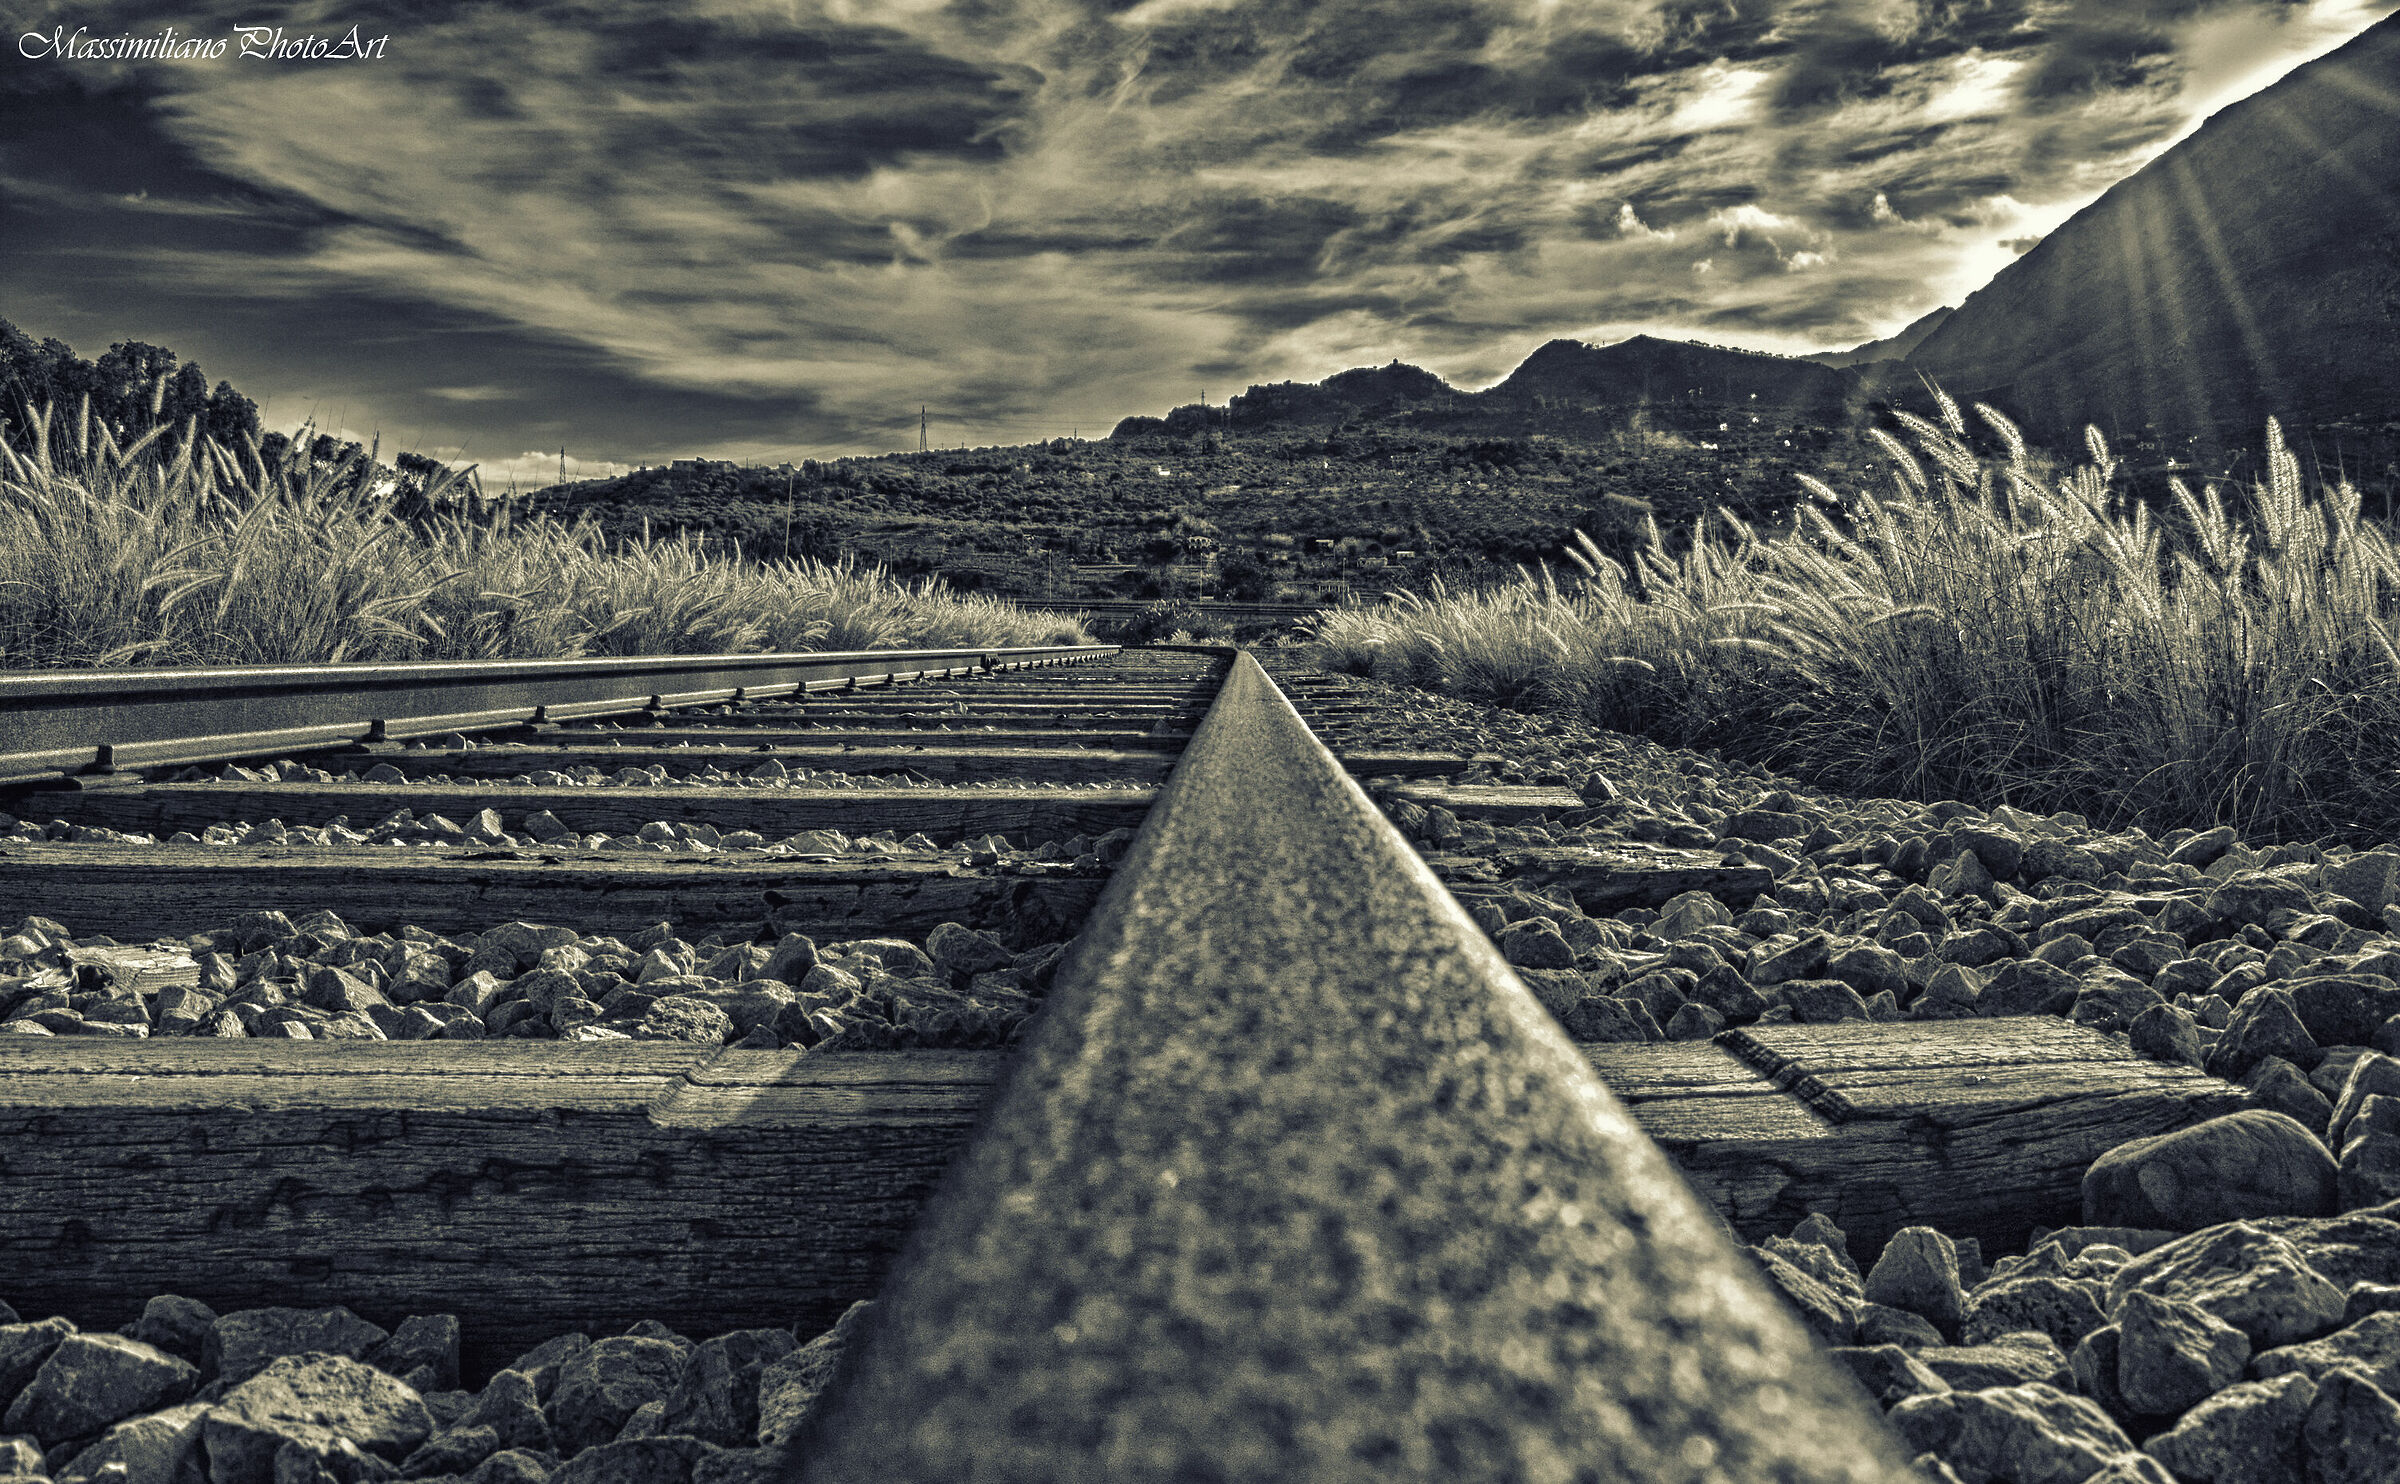 Sometimes memories travel on rails...